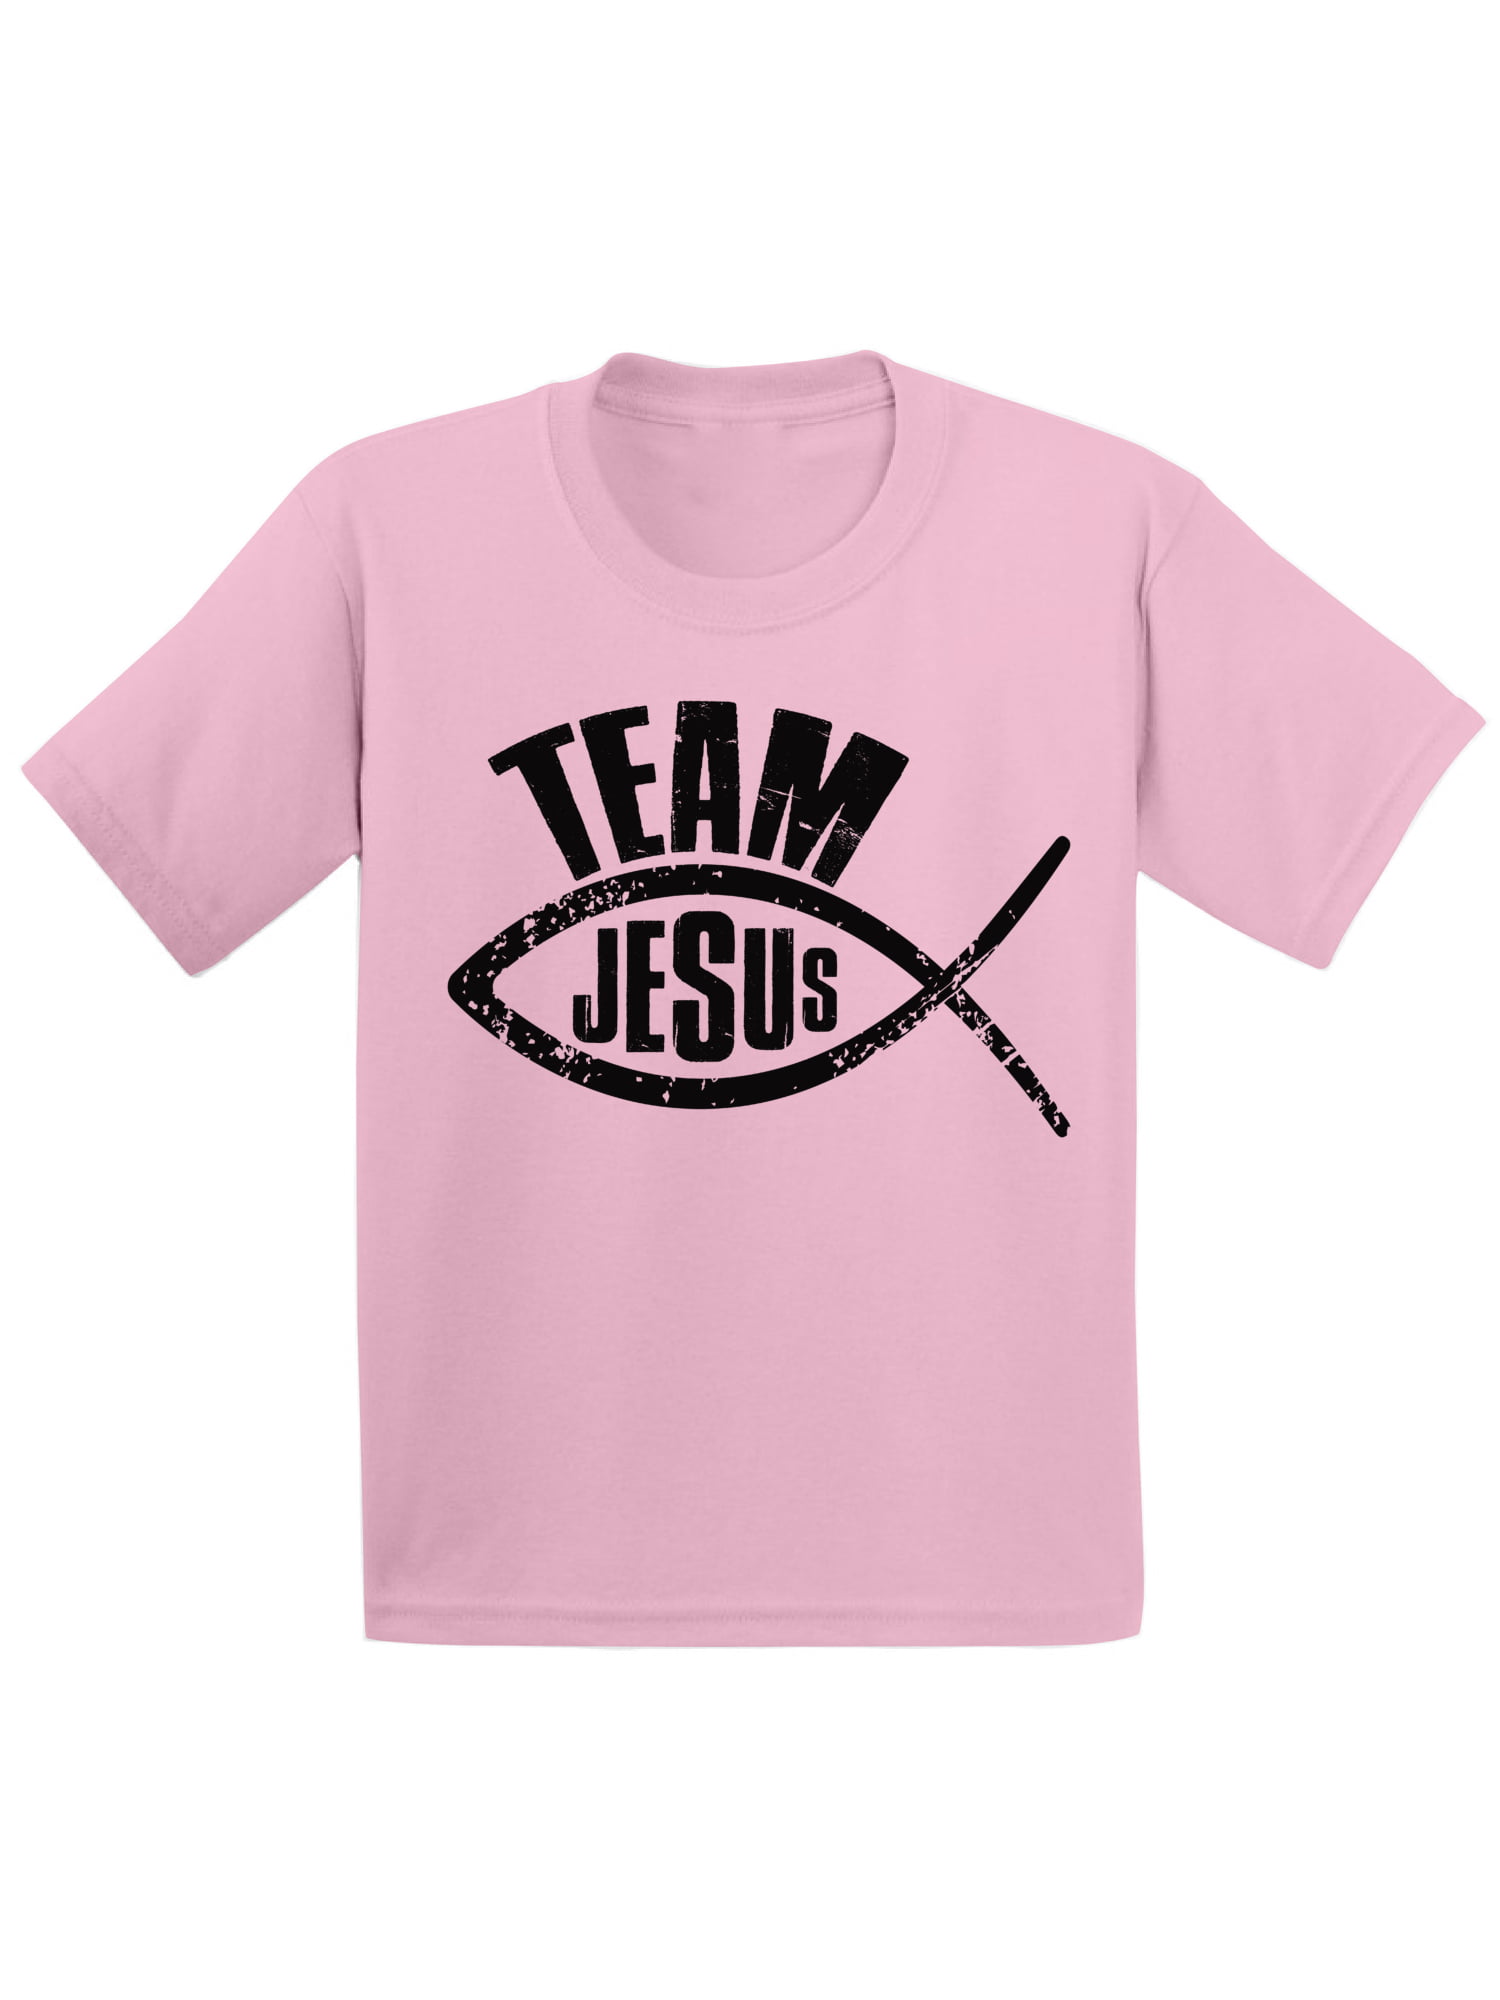 Awkward Styles Team Jesus Infant T-Shirt Team Shirt for Kids Fish T ...